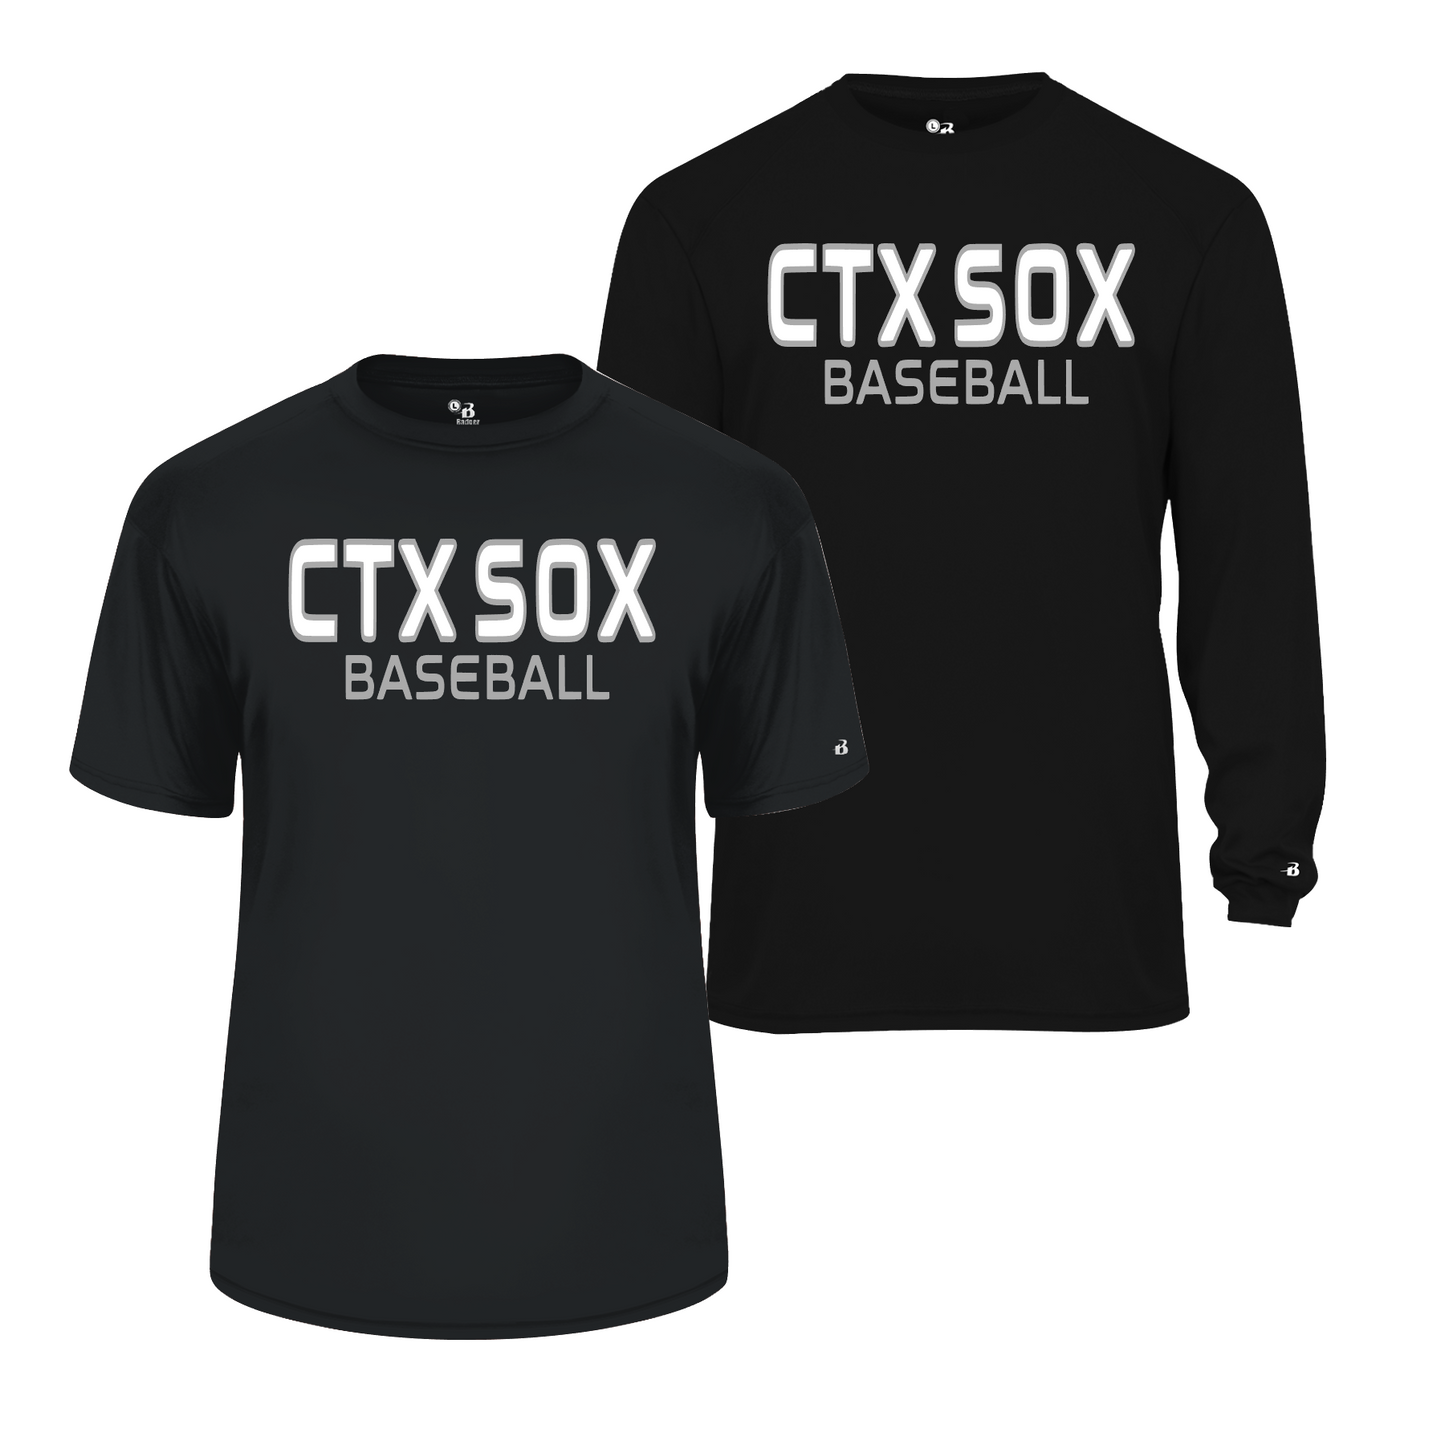 Black CTX Sox Baseball Tshirt, Sox Baseball Black Shirt, Longsleeve Sox Baseball Tee